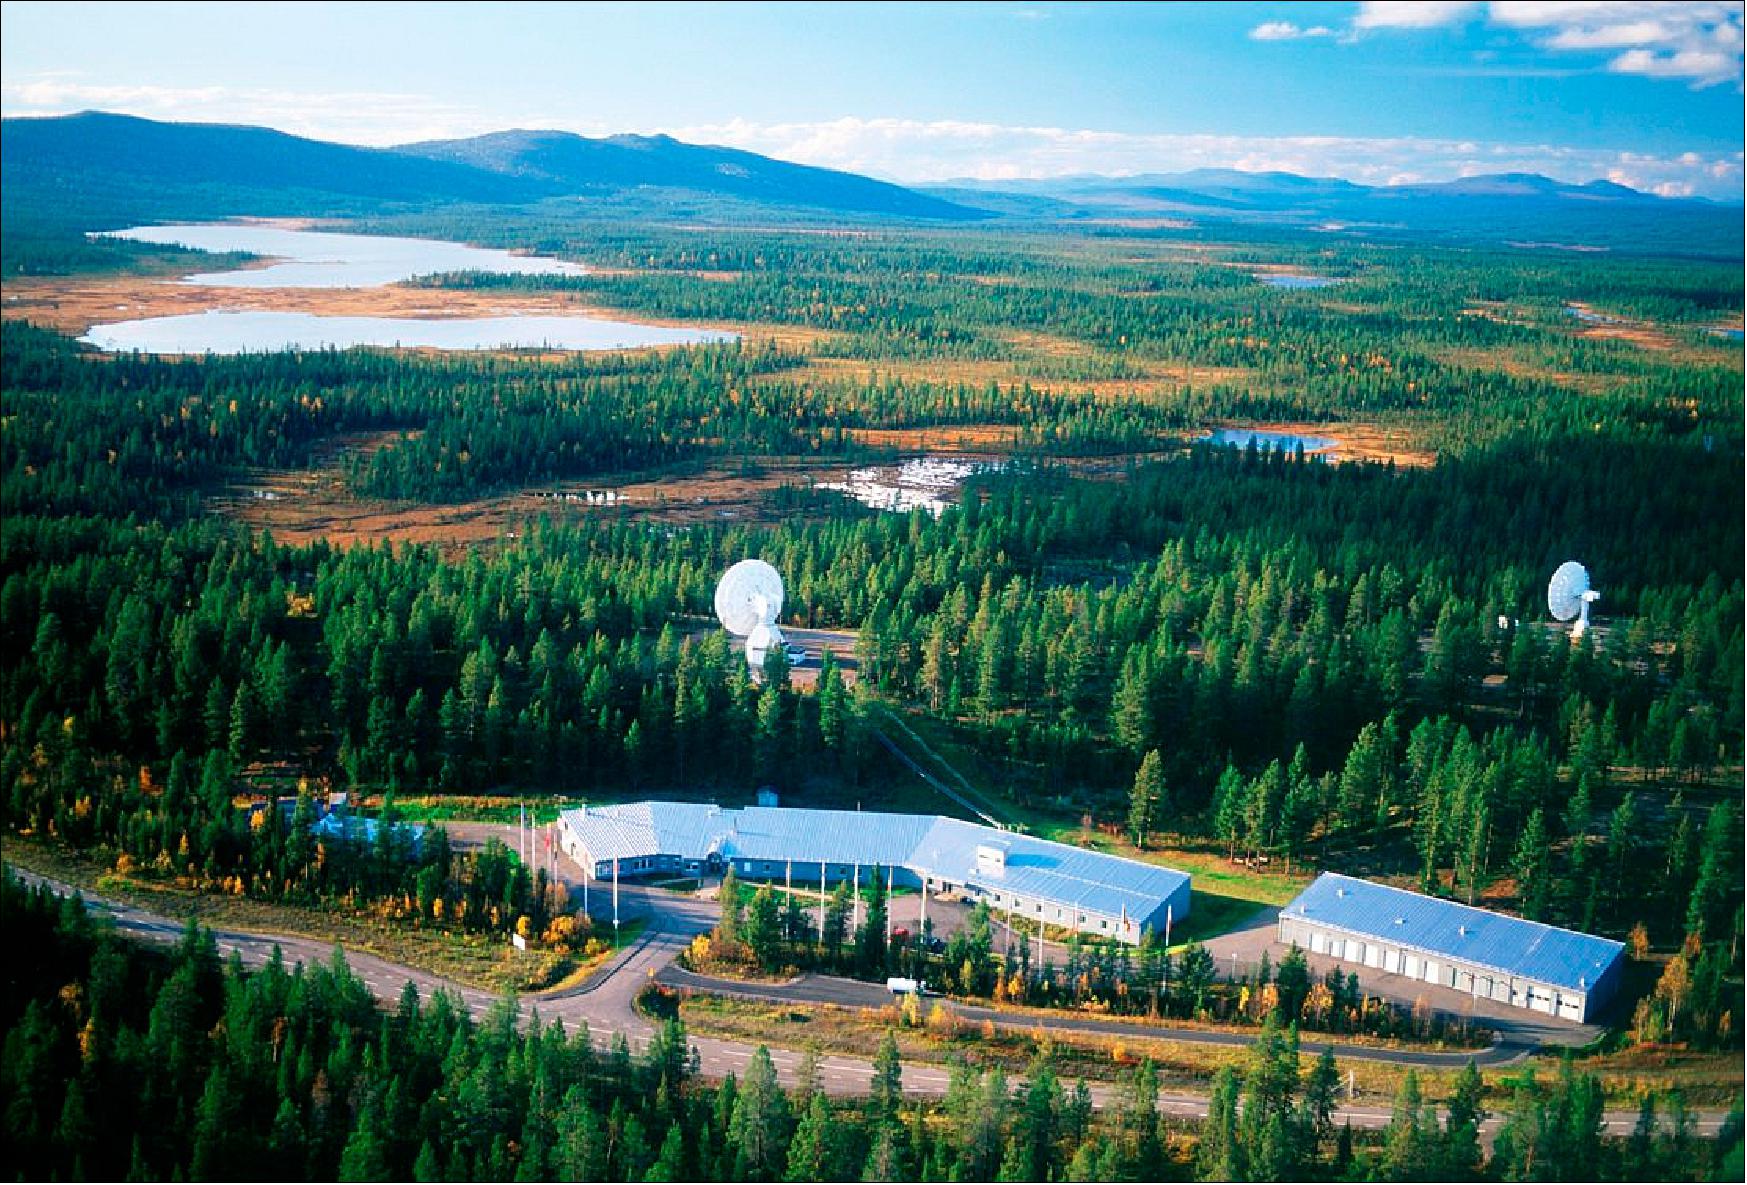 Figure 6: Photo of the Kiruna station, located at Salmijärvi, 38 km east of Kiruna, in northern Sweden (image credit: ESA, CC BY-SA 3.0 IGO)